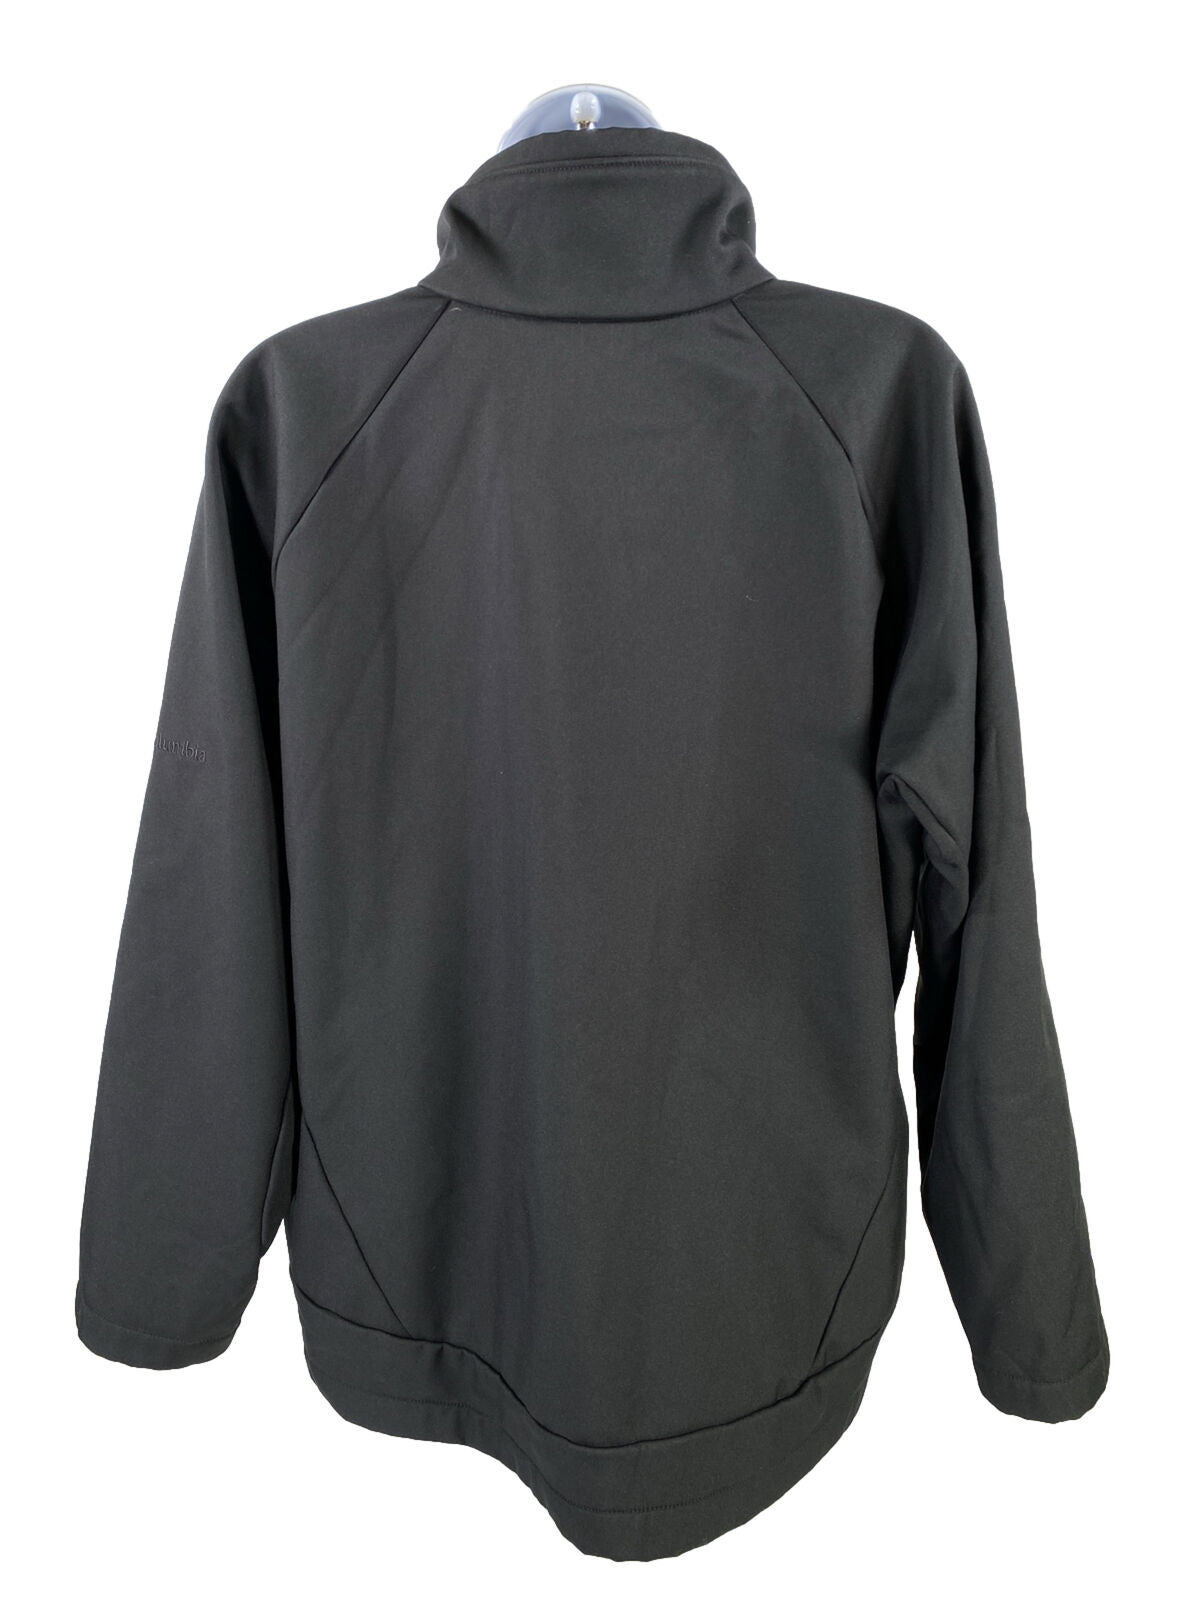 Columbia Women's Black Fleece Lined Long Sleeve Soft Shell Jacket - XL